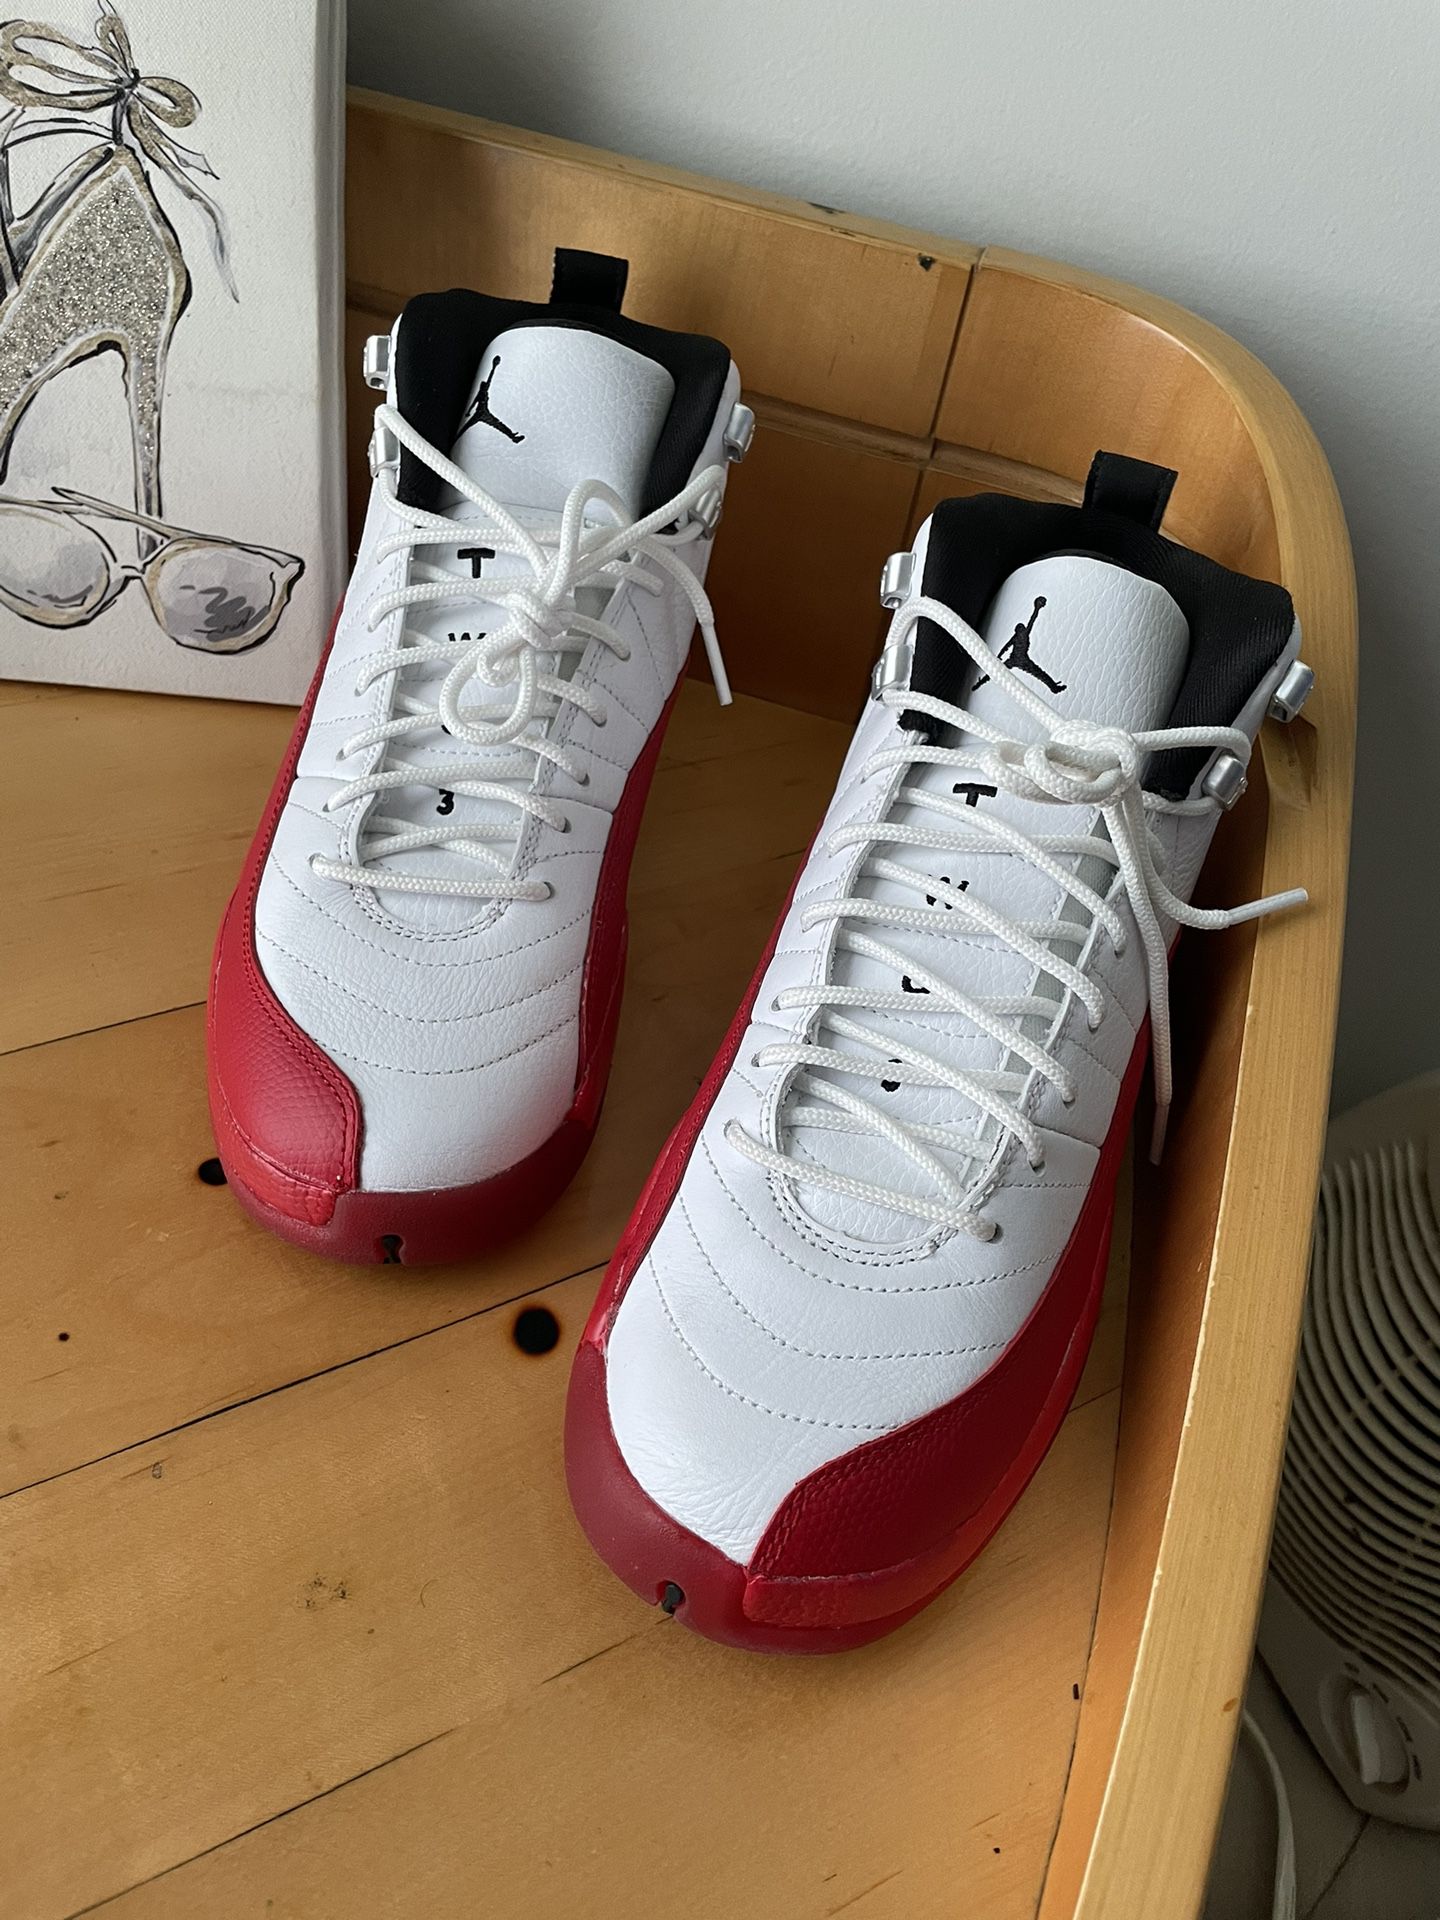 Jordan 12s Cherry Red & White Size 7